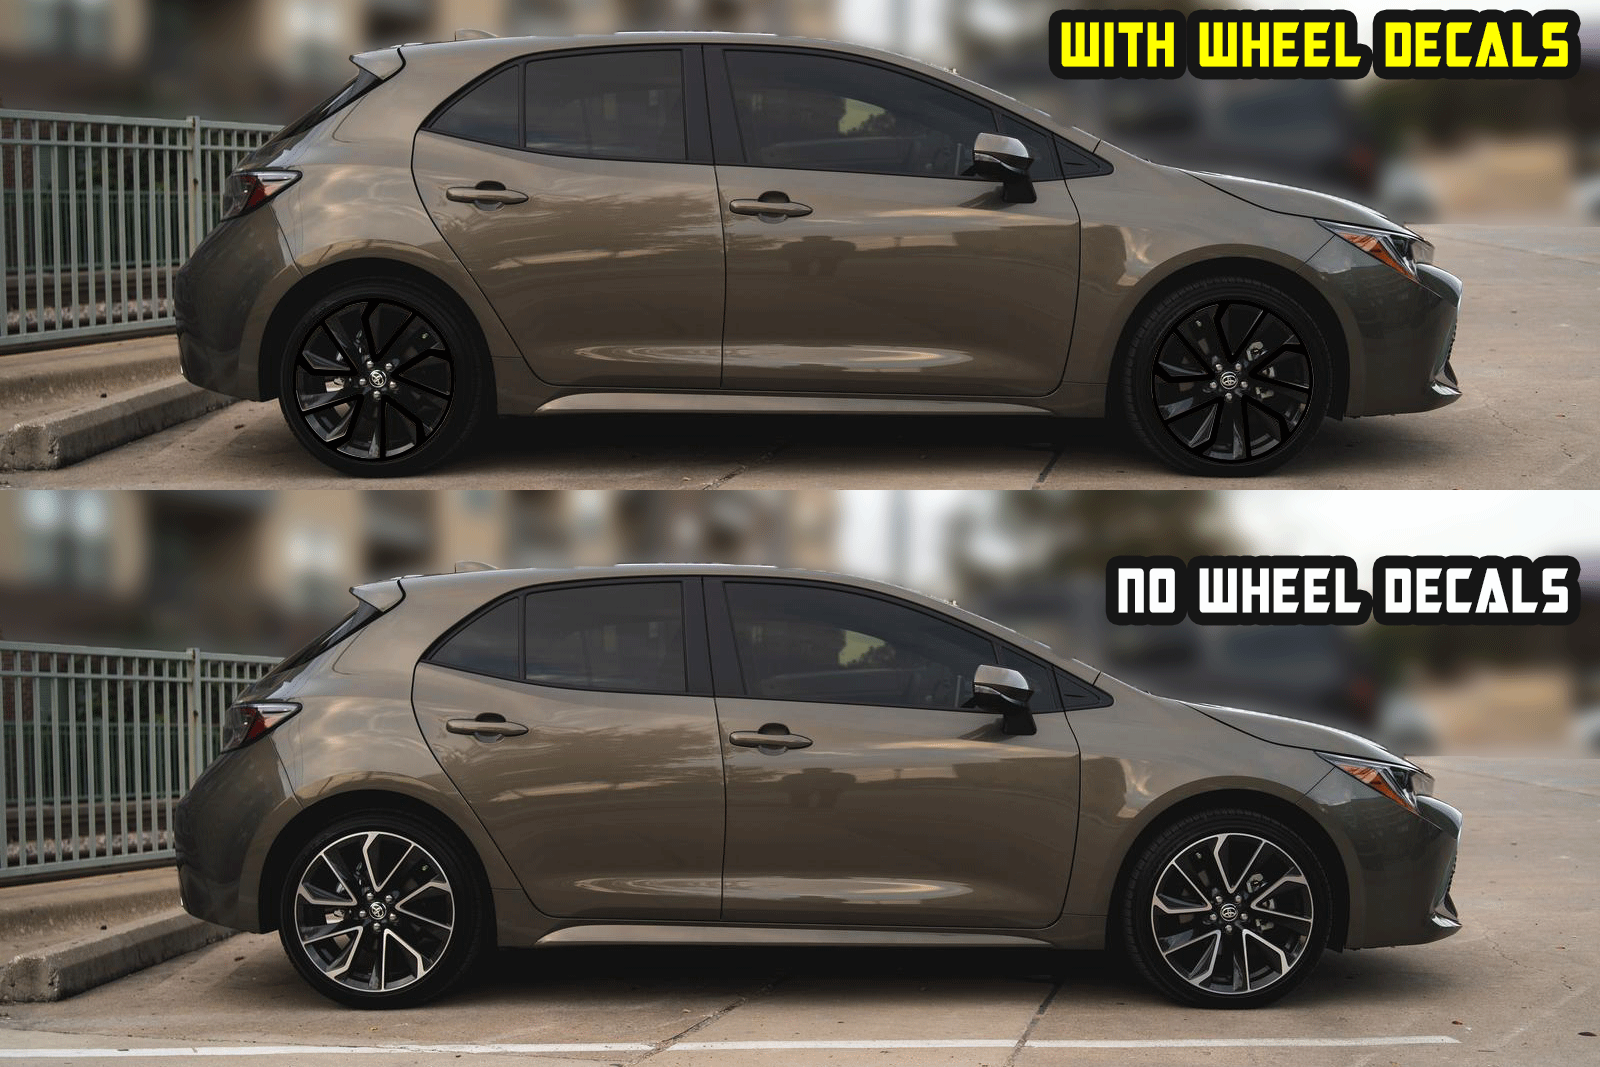 2019 Corolla Hatchback Black Wheel Decals